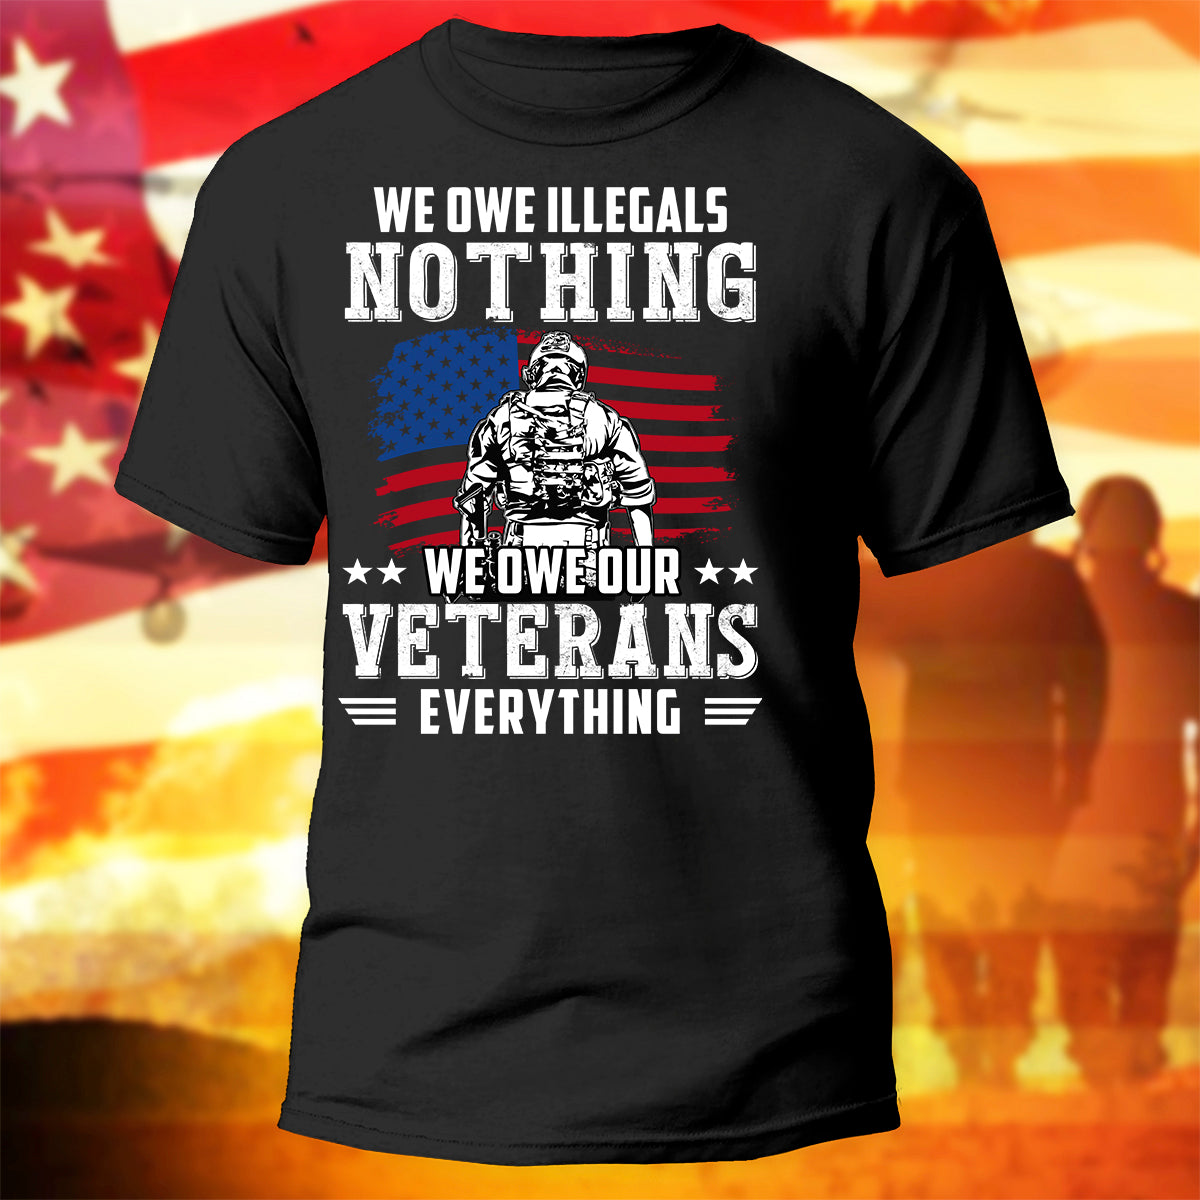 US Veterans T-Shirt We Own Our Veterans Shirt Military Gift